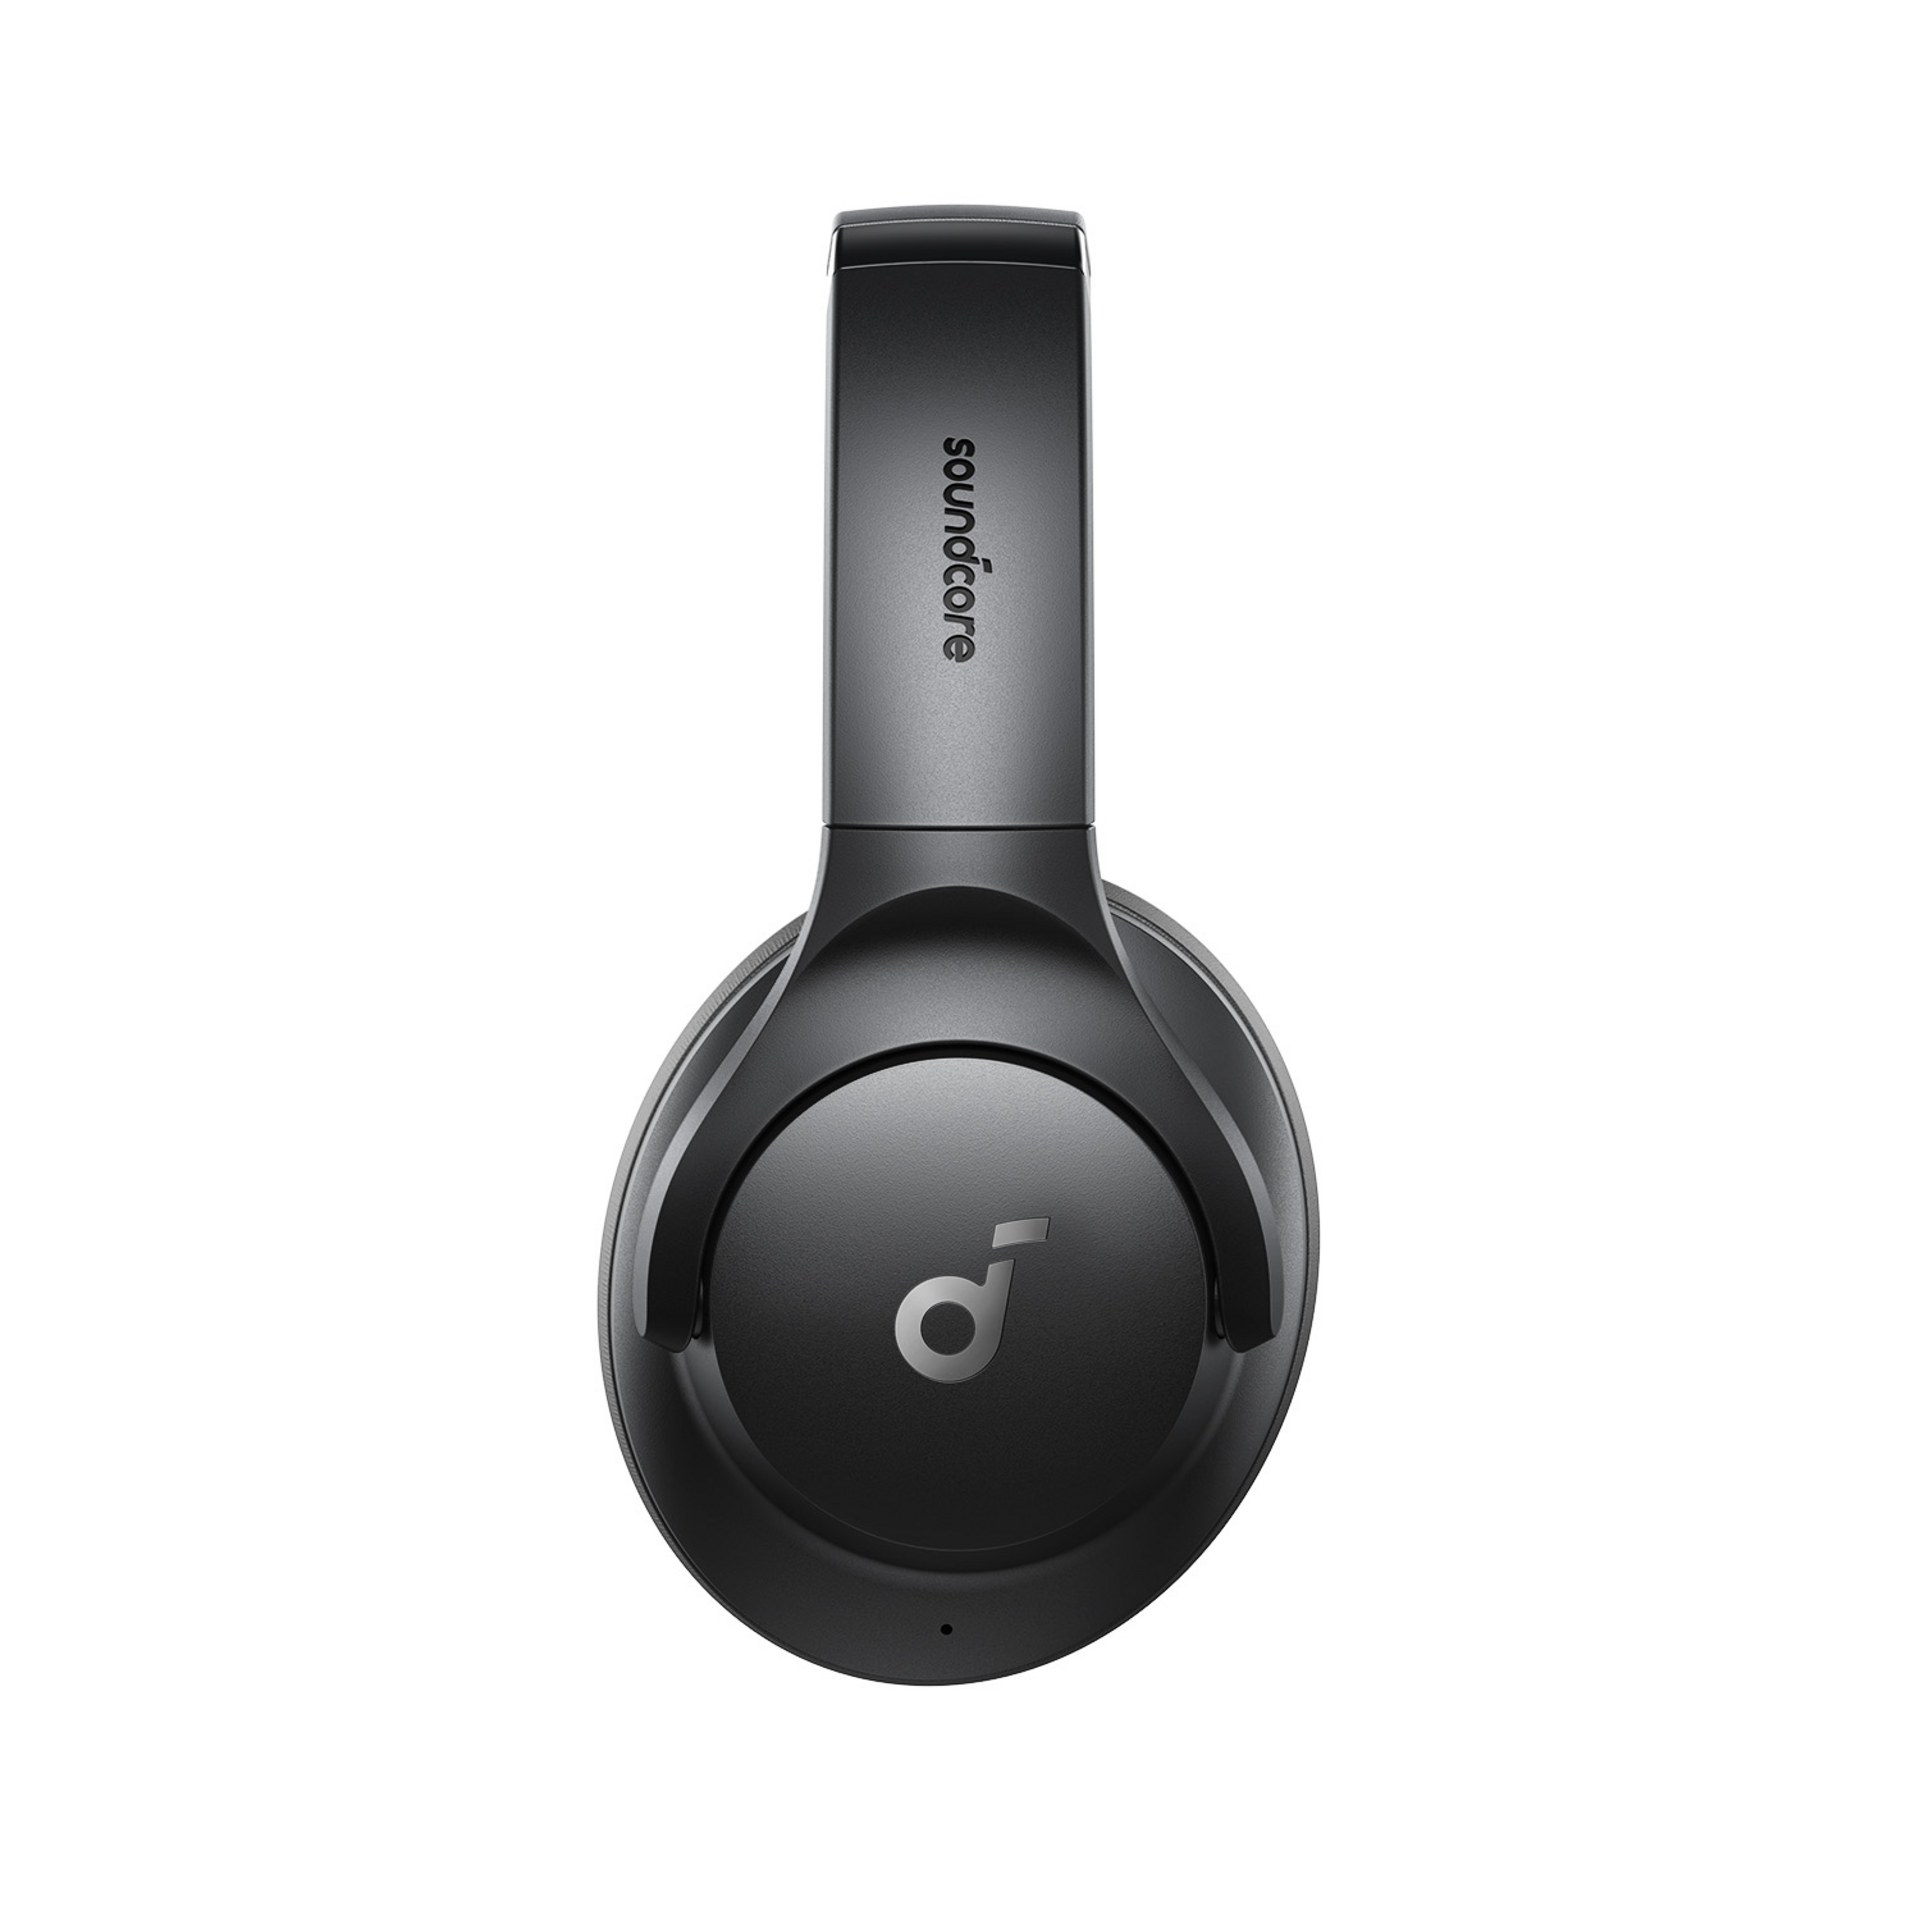 Soundcore Q20i Hybrid Active Noise Cancelling Headphones User Manual